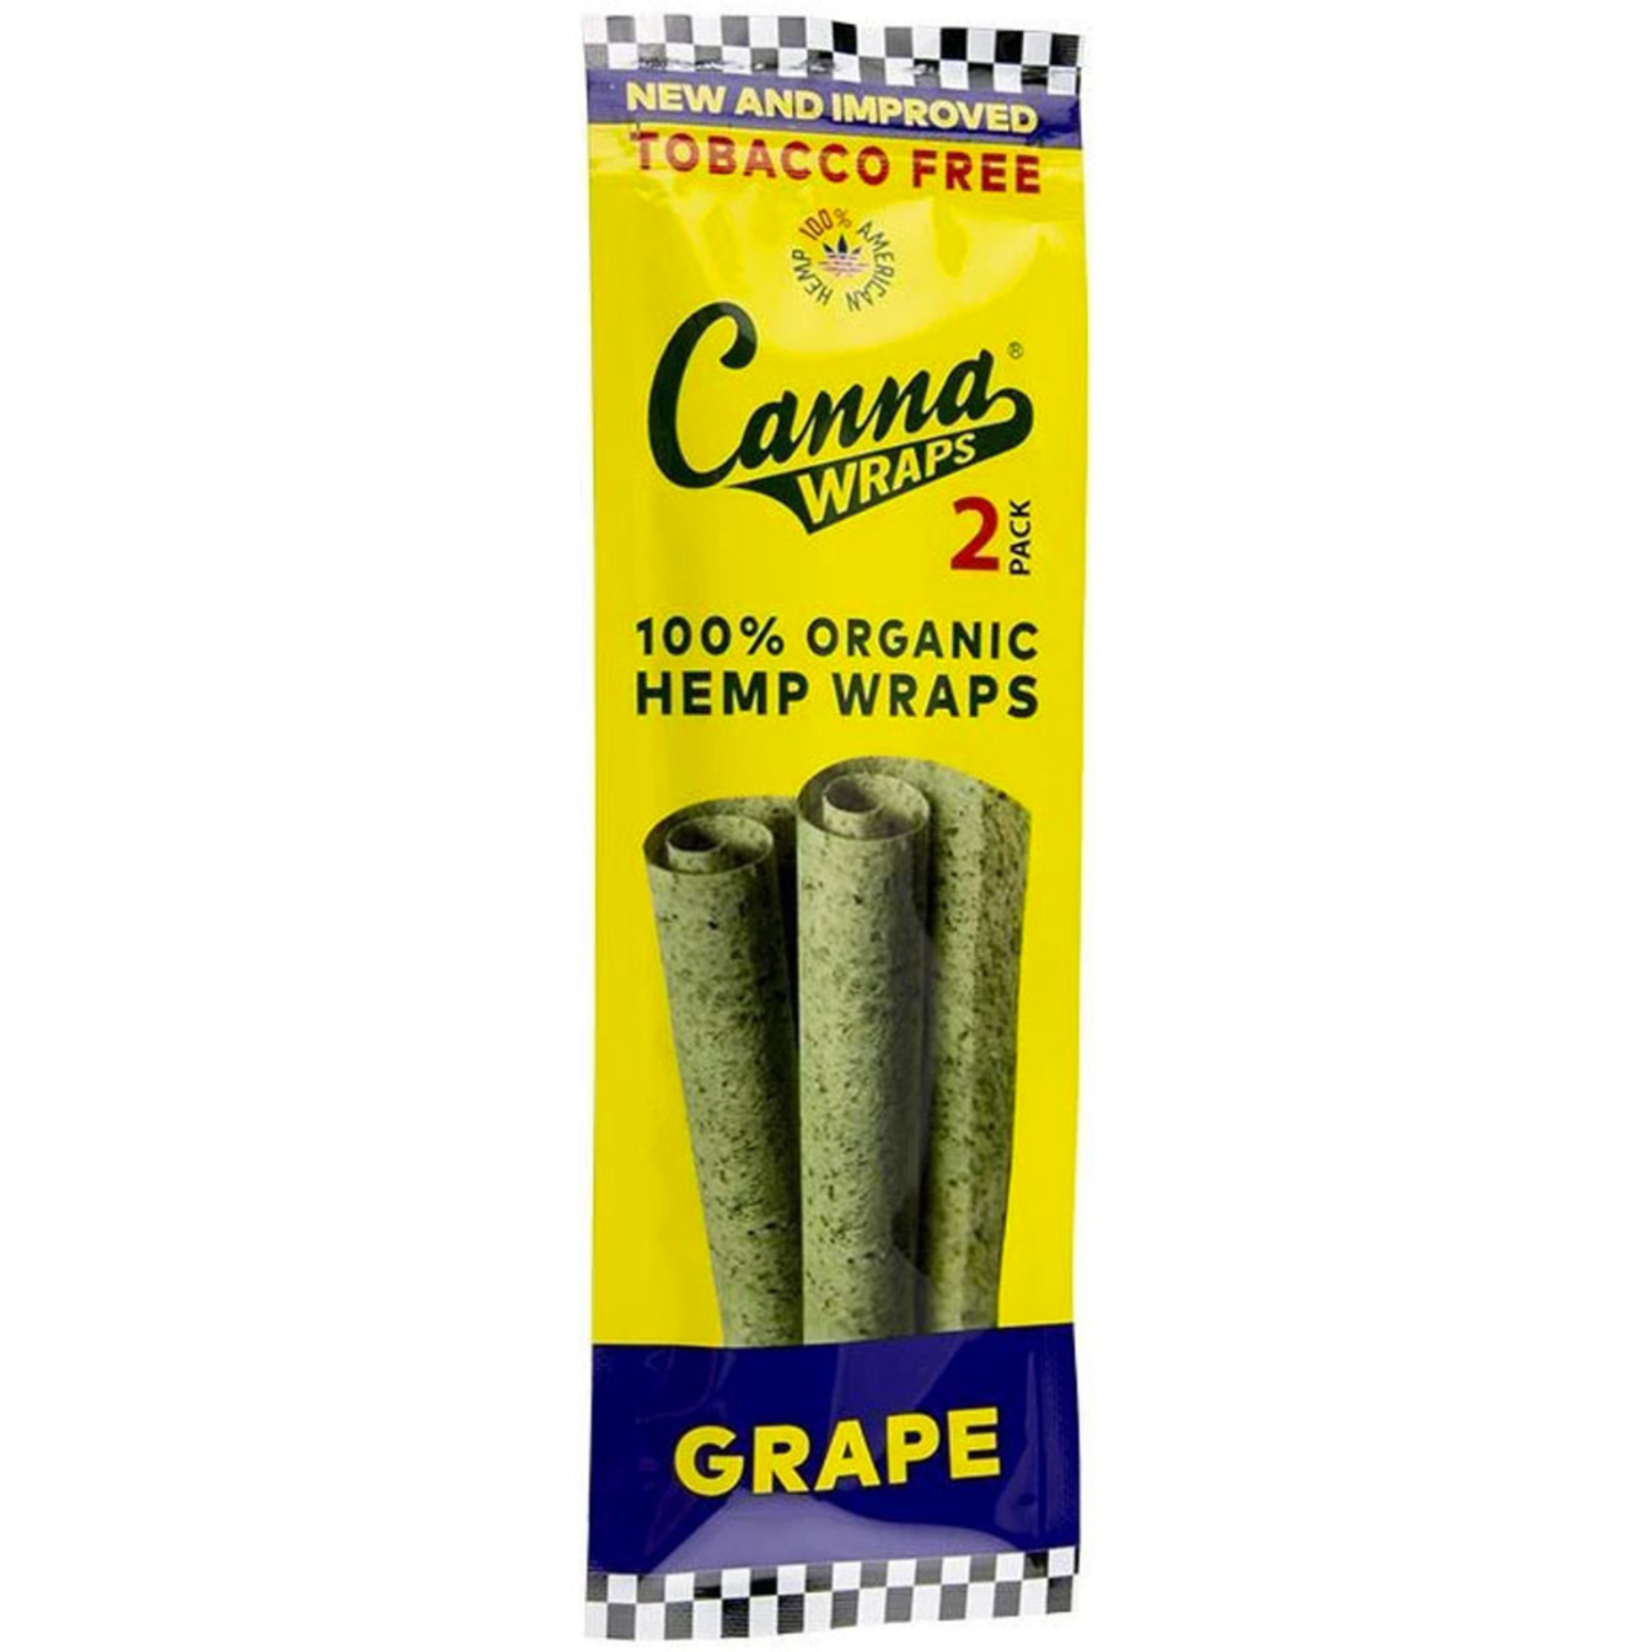 CannaWraps CannaWraps Organic Hemp Wraps